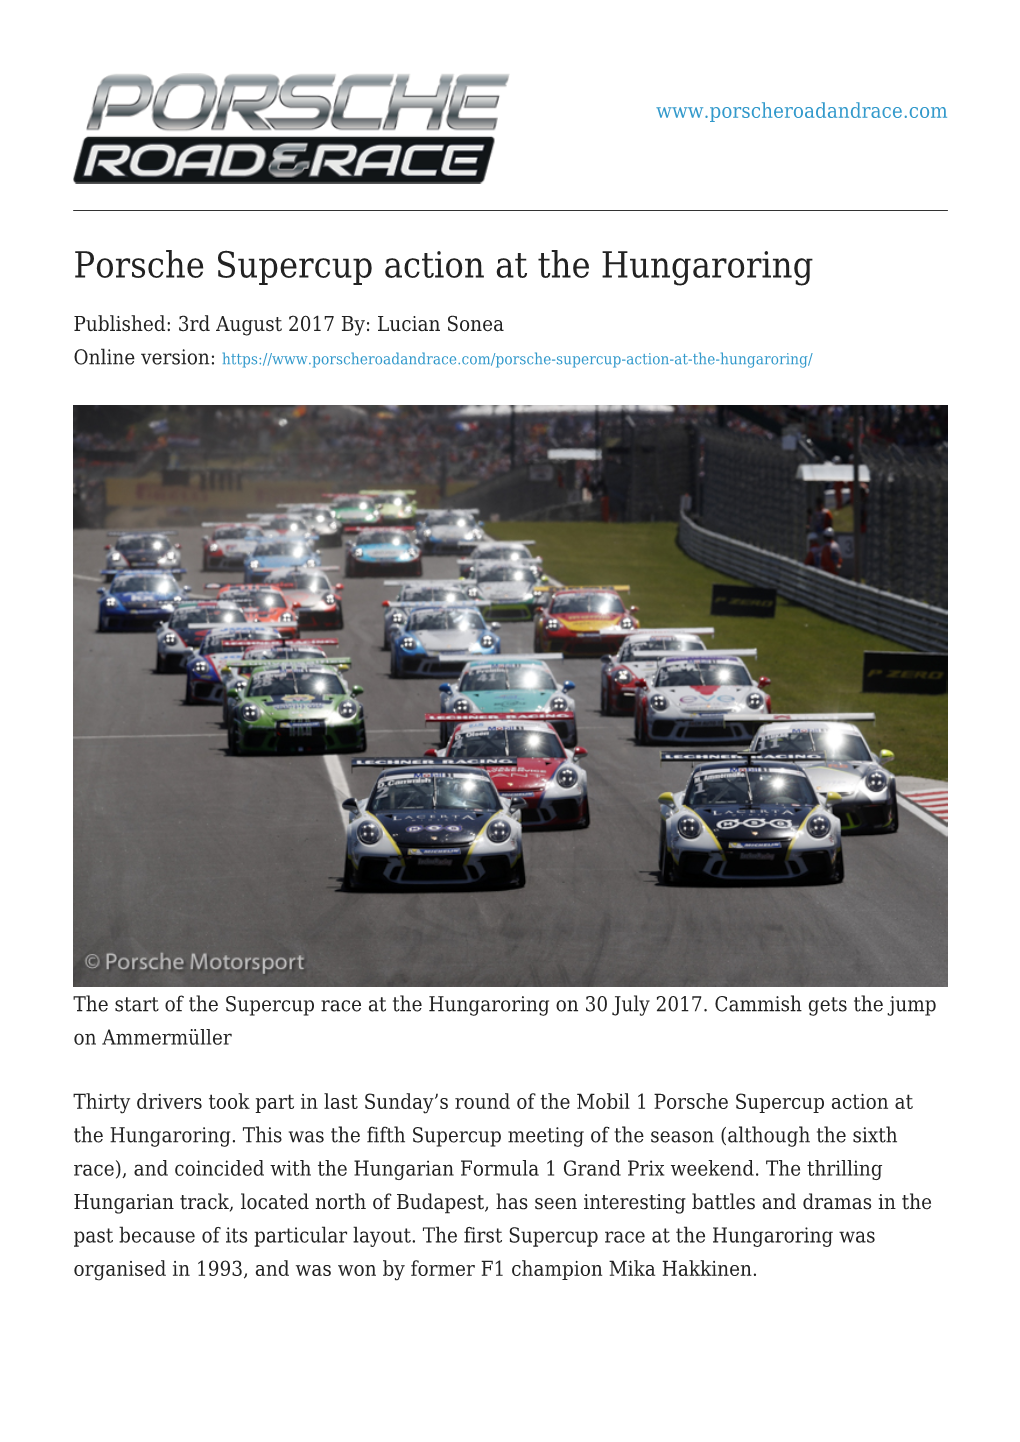 Porsche Supercup Action at the Hungaroring